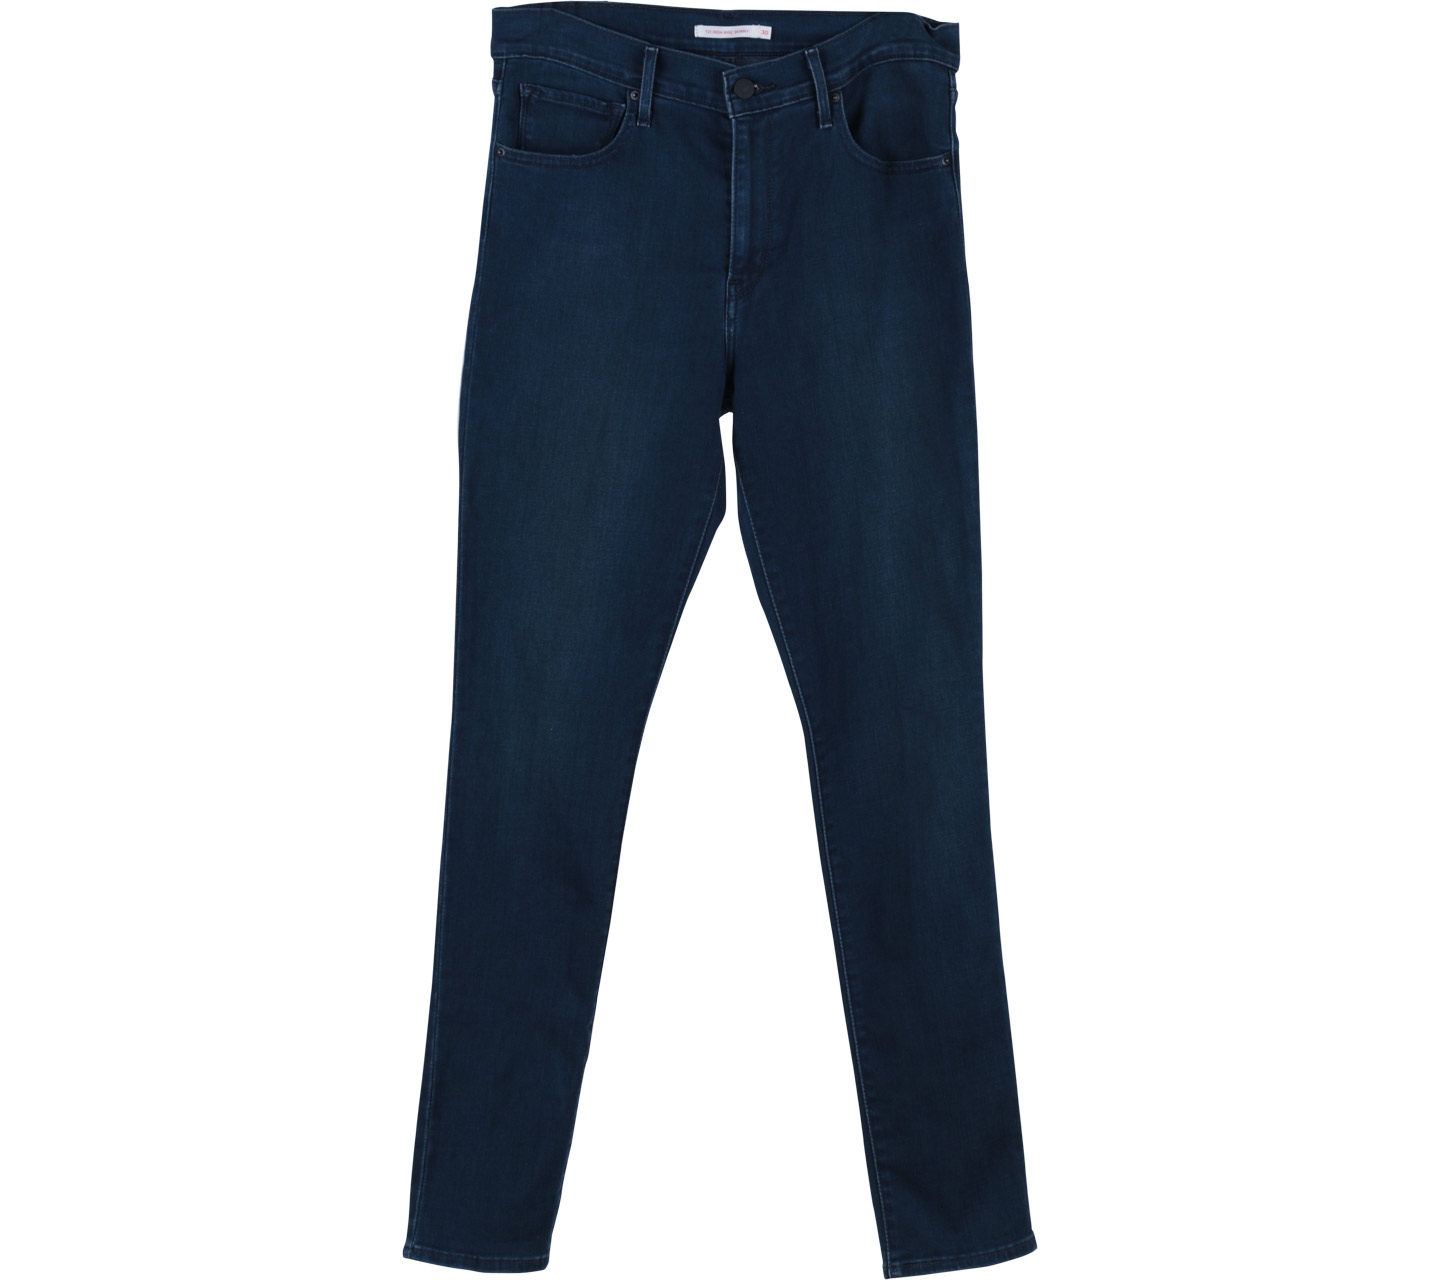 Levi's Blue Skinny Jeans Pants